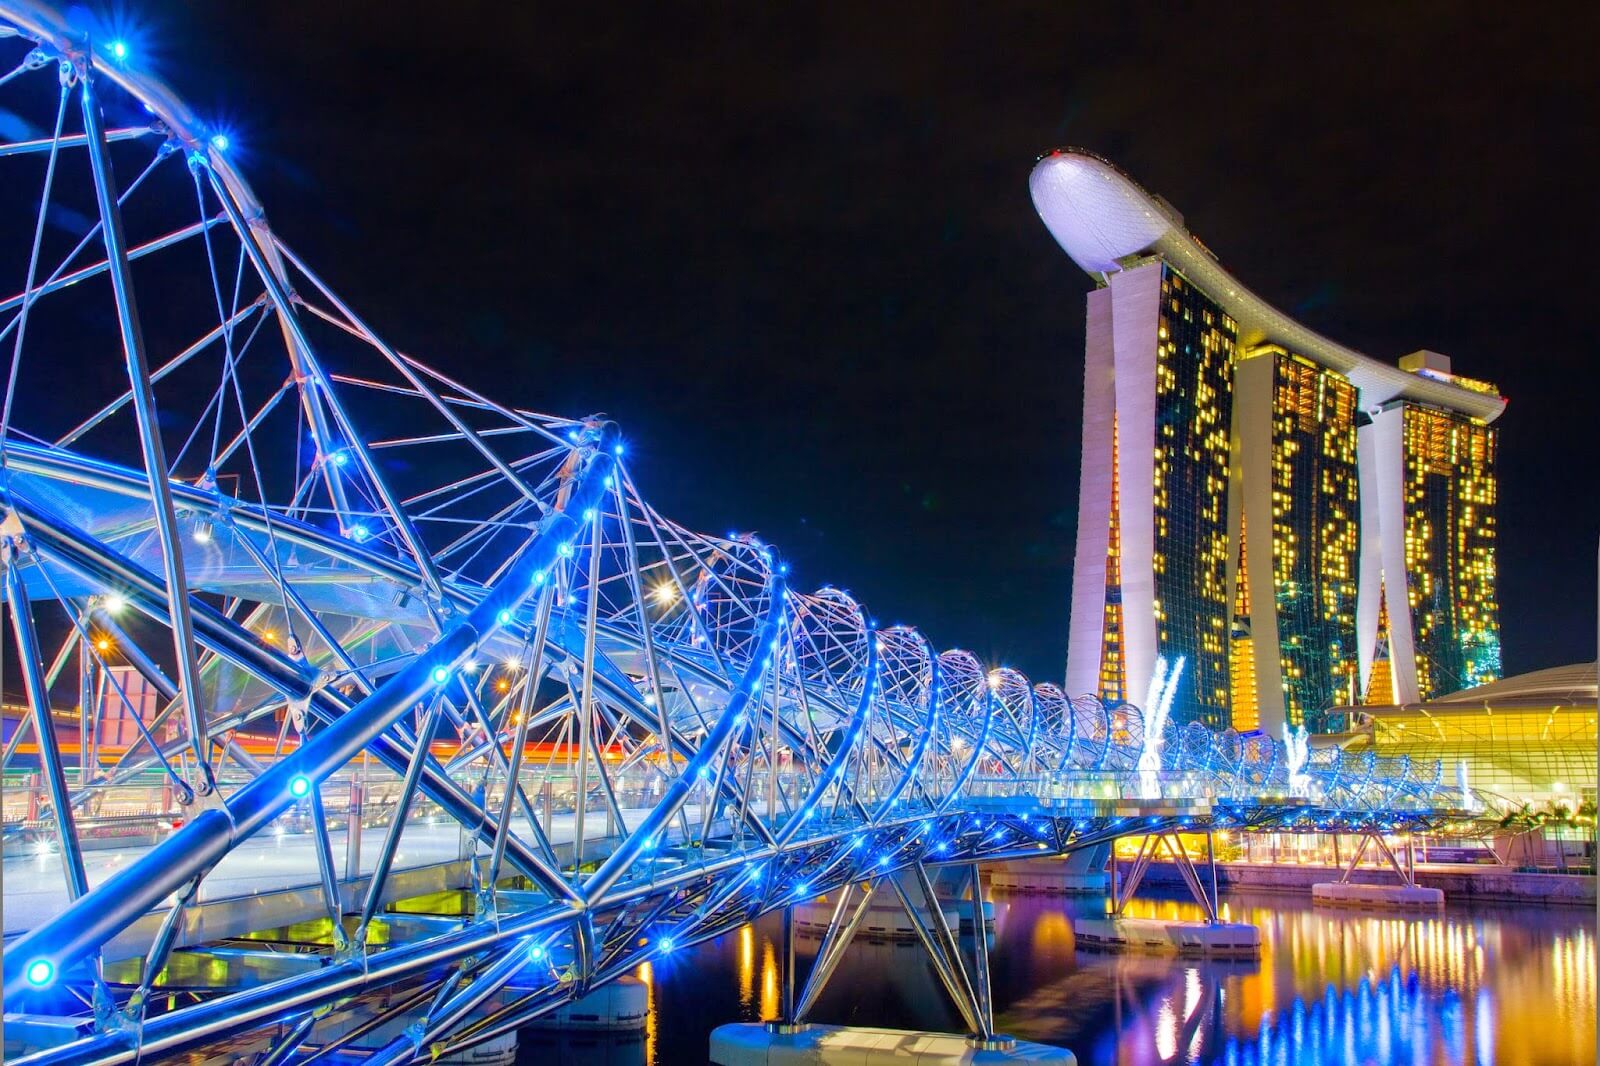 Alkaff Bridge - Cây cầu đẹp nhất của Singapore